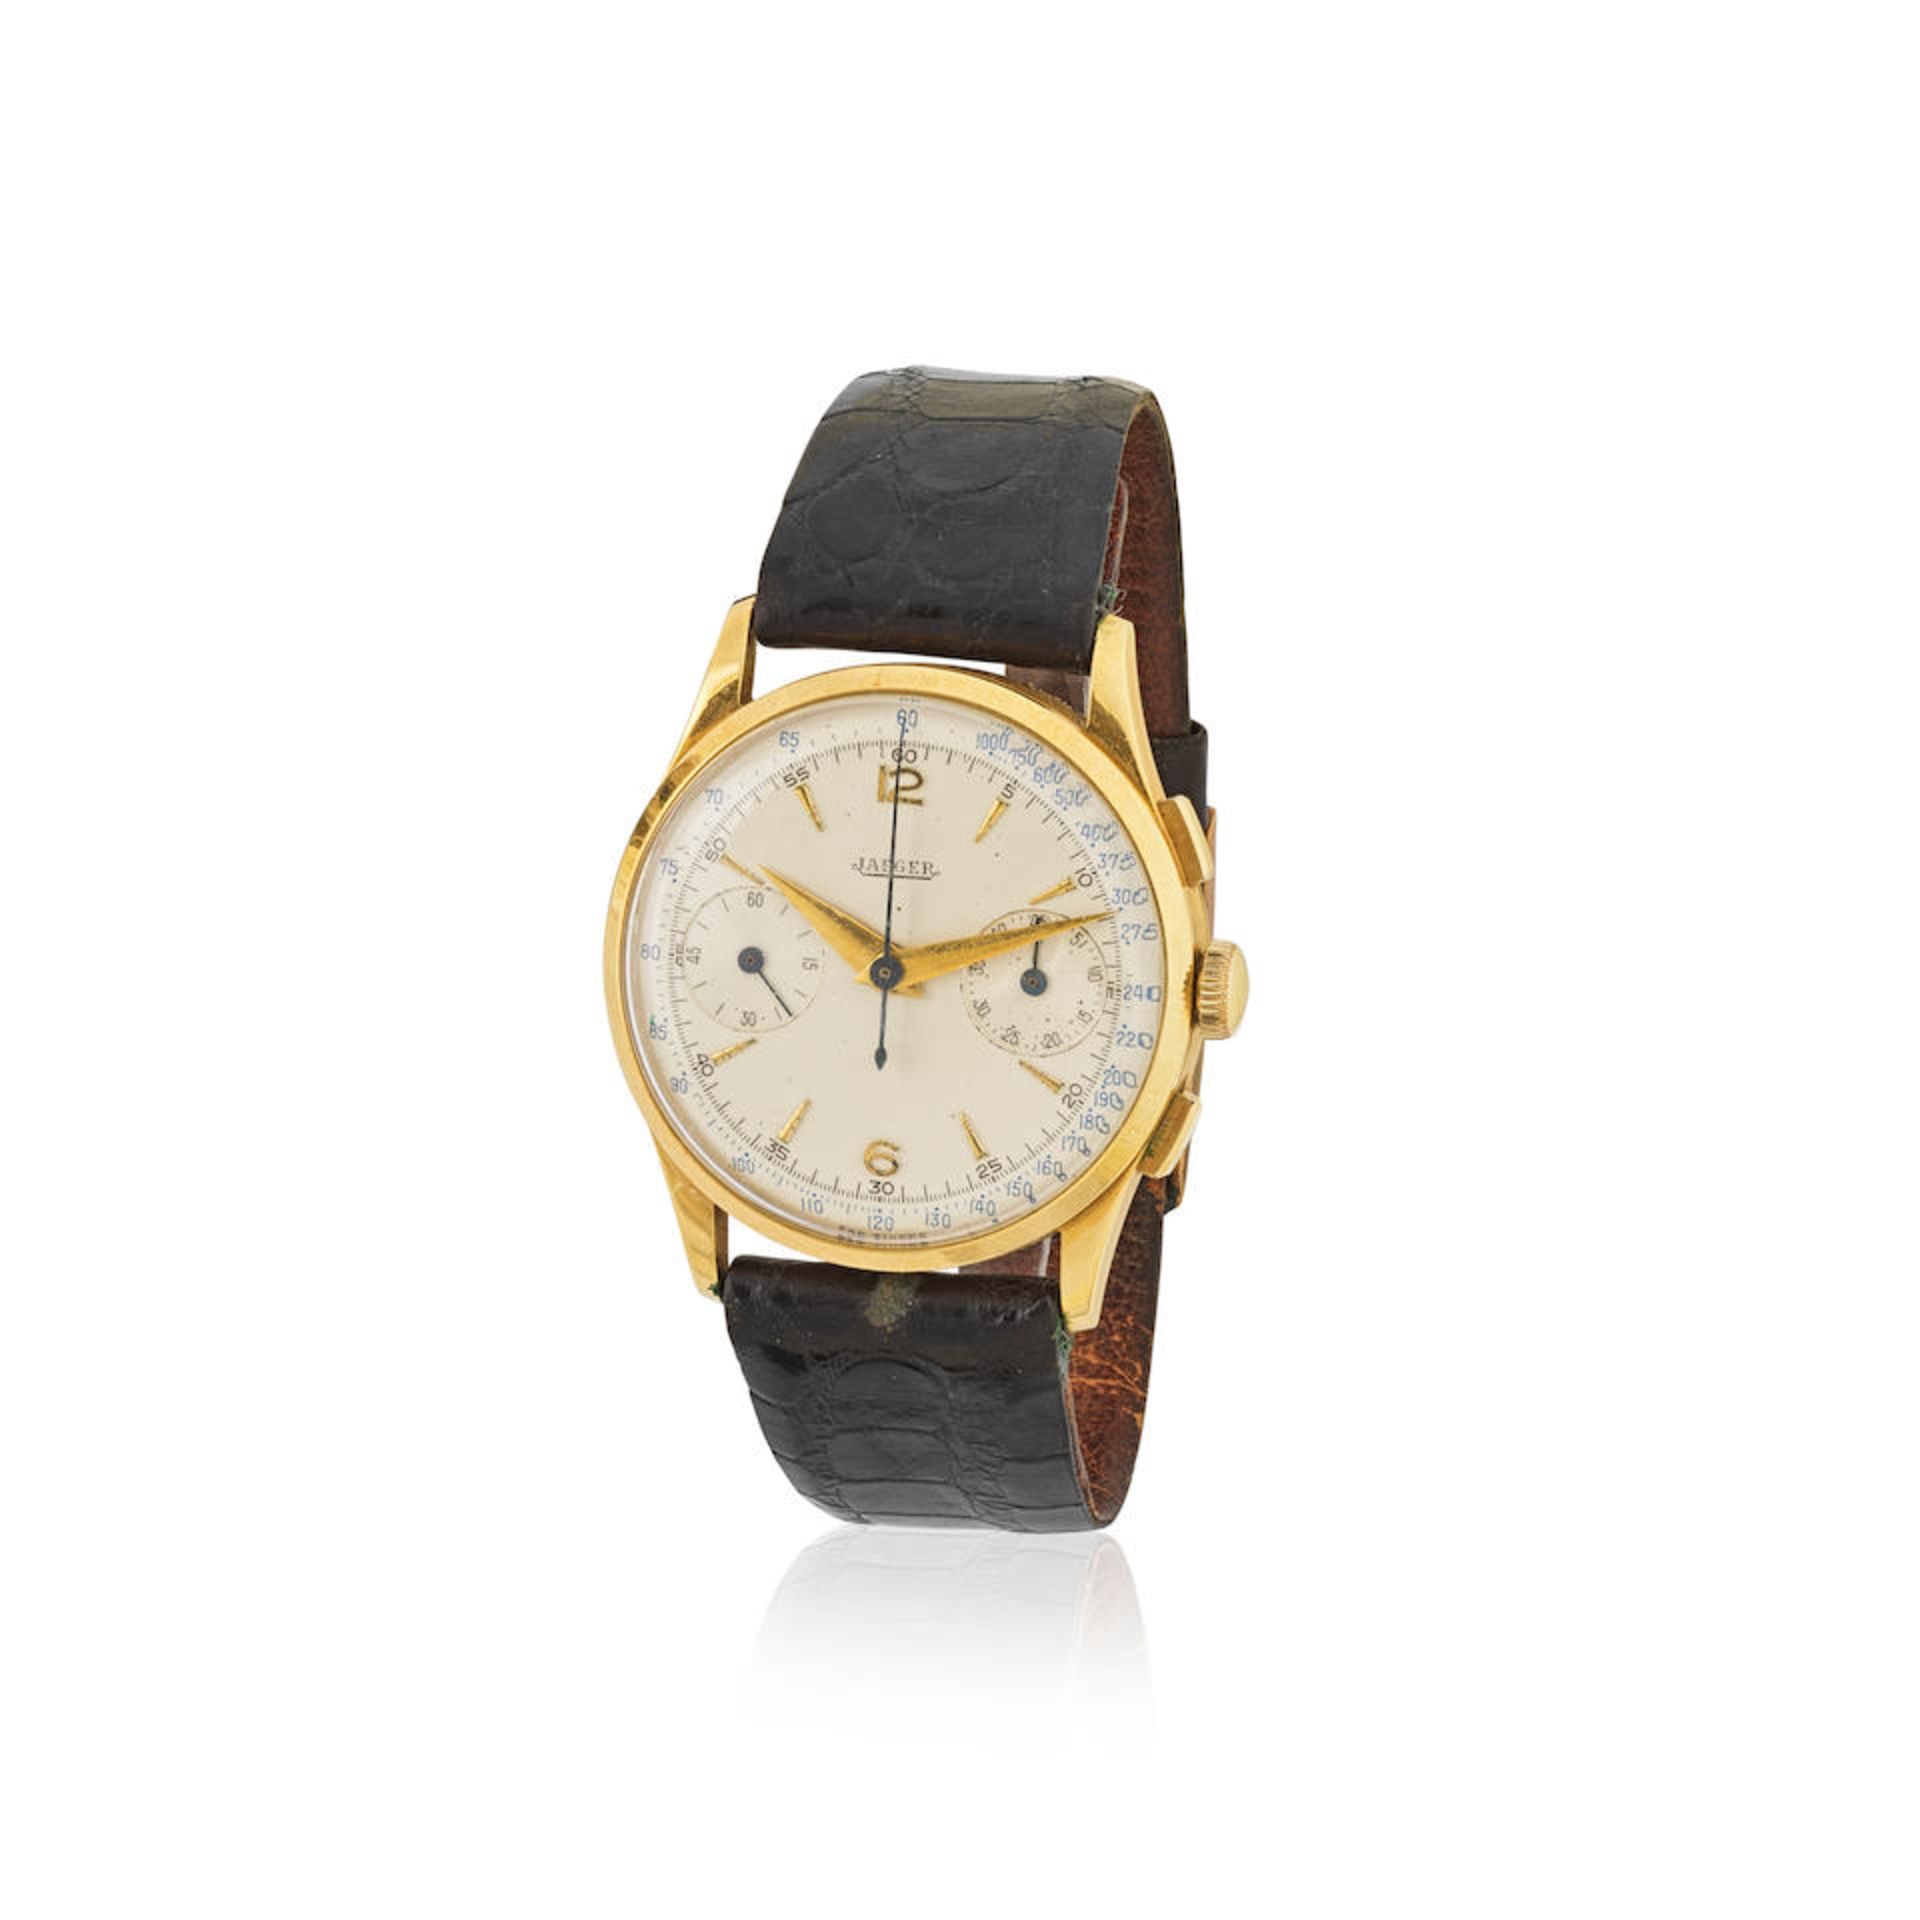 Jaeger. A fine 18K gold manual wind chronograph wristwatch Jaeger. Beau chronographe bracelet en...